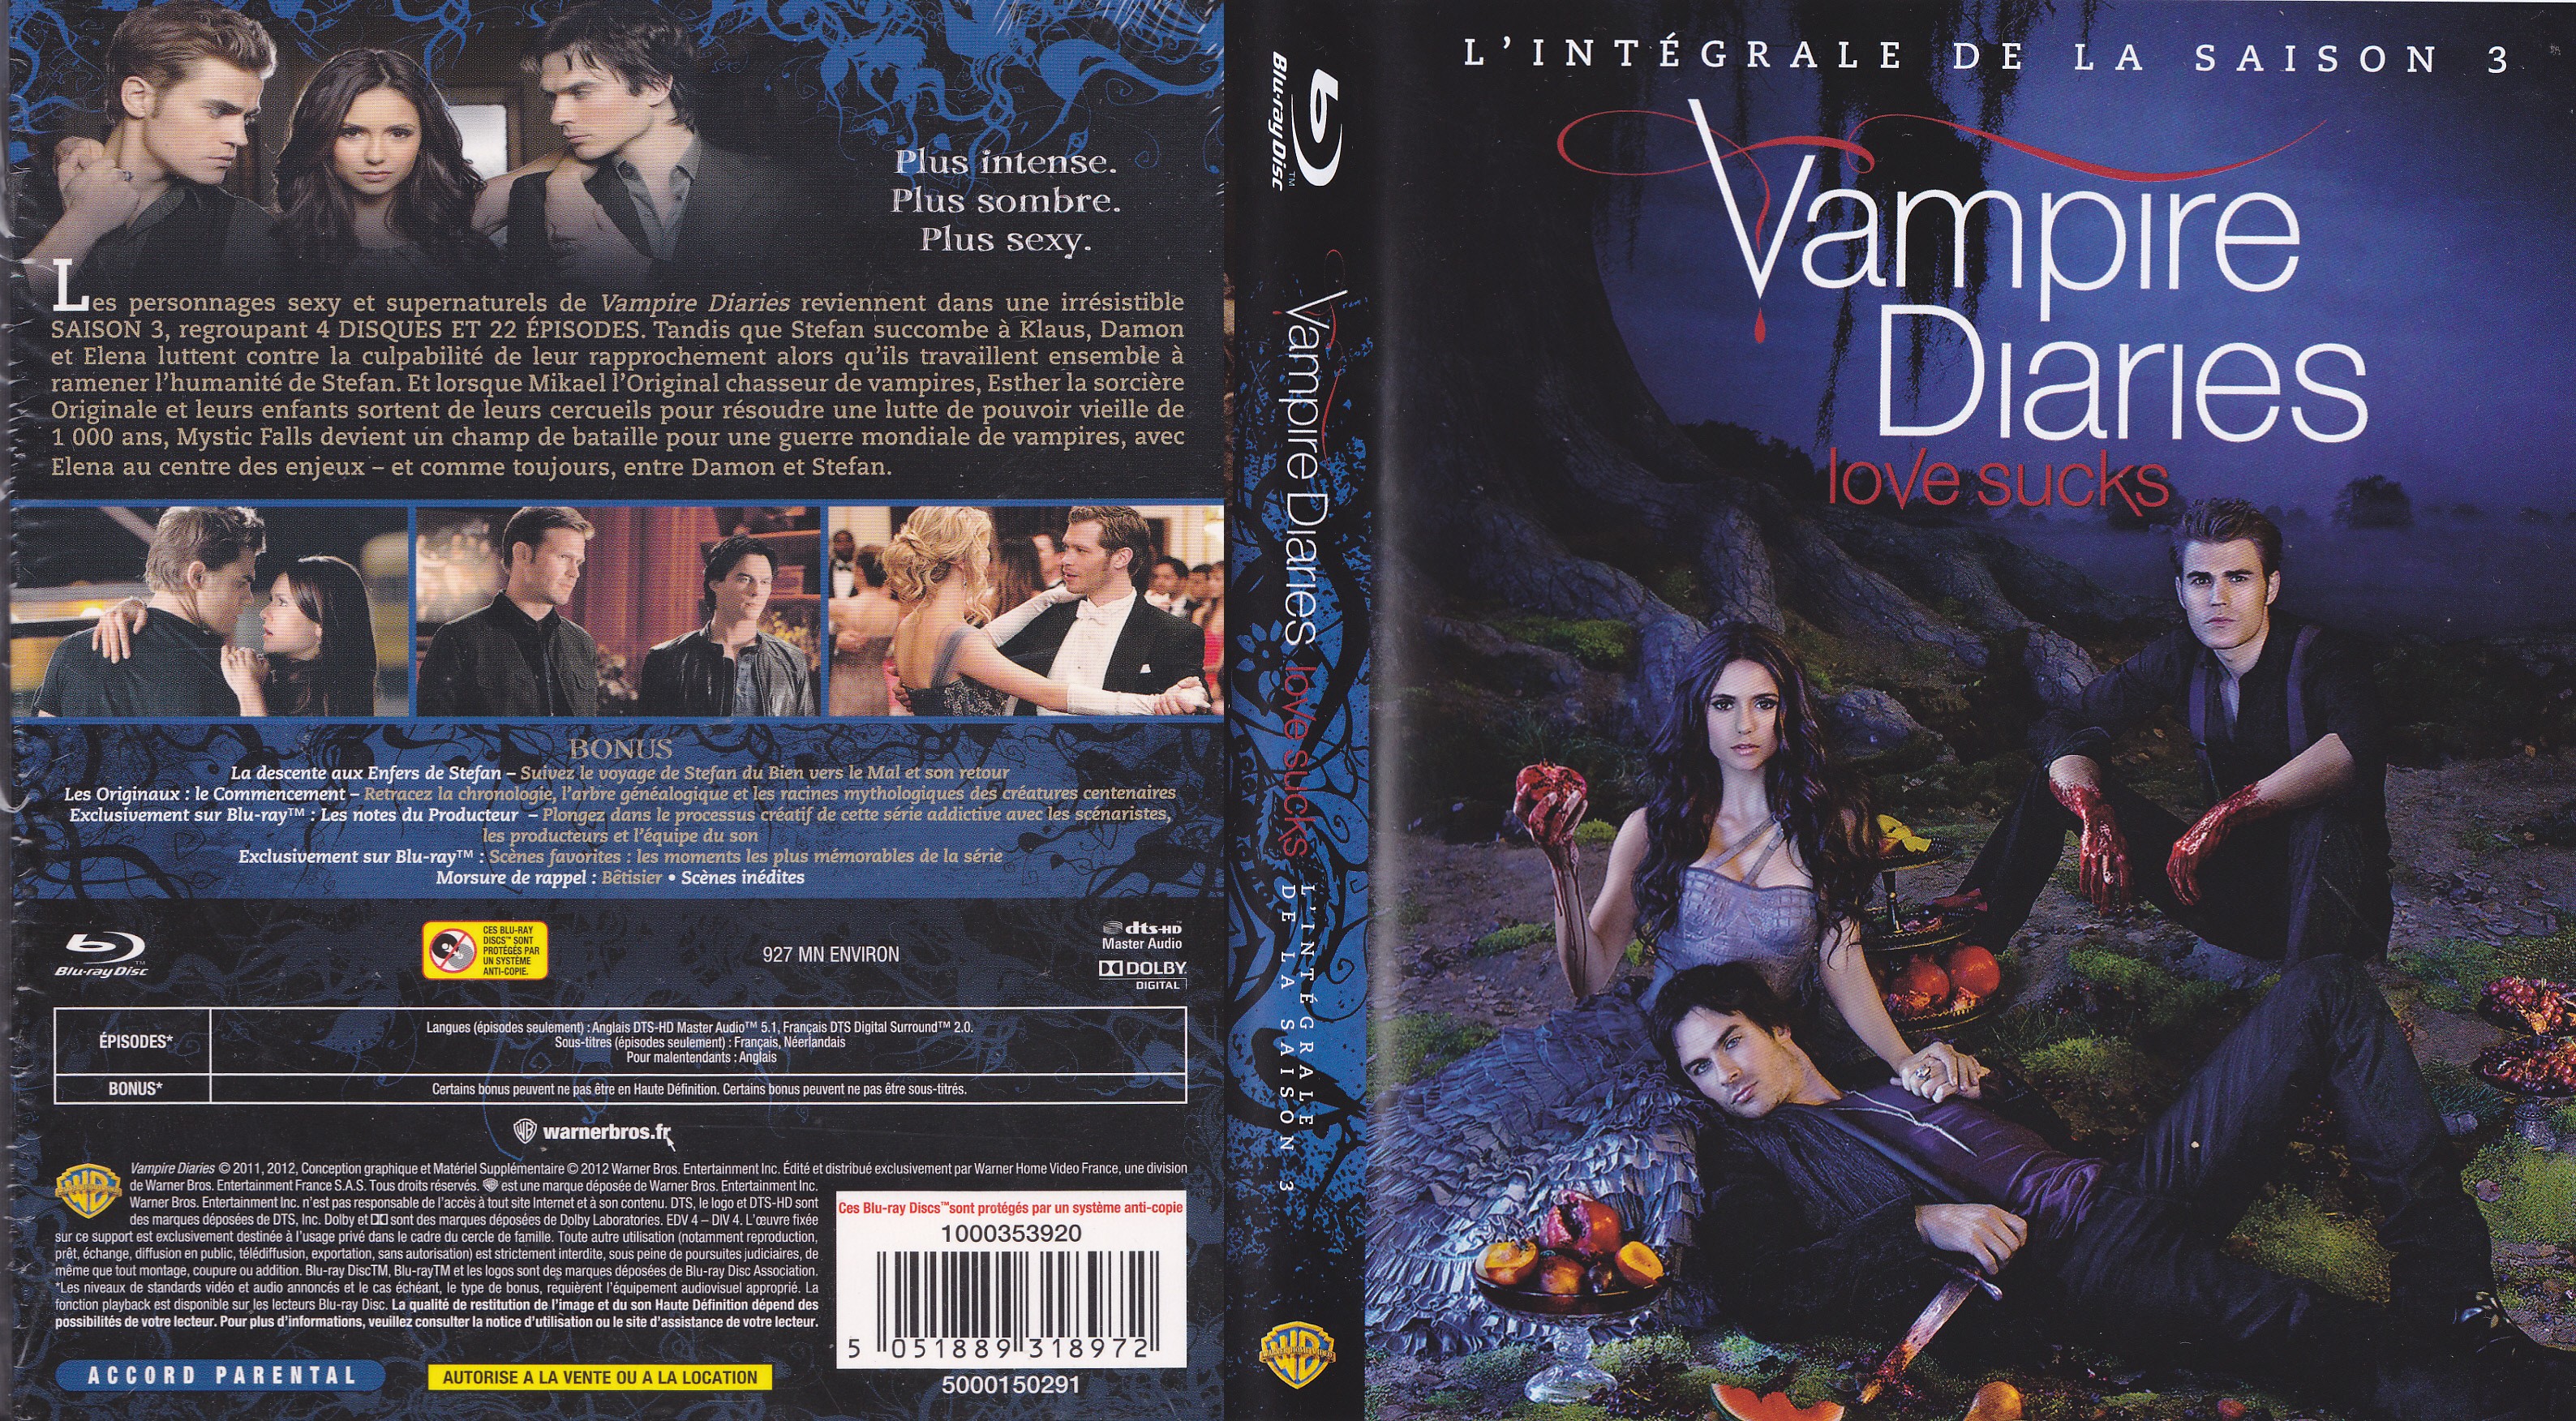 Jaquette DVD Vampire diaries Saison 3 (BLU-RAY)